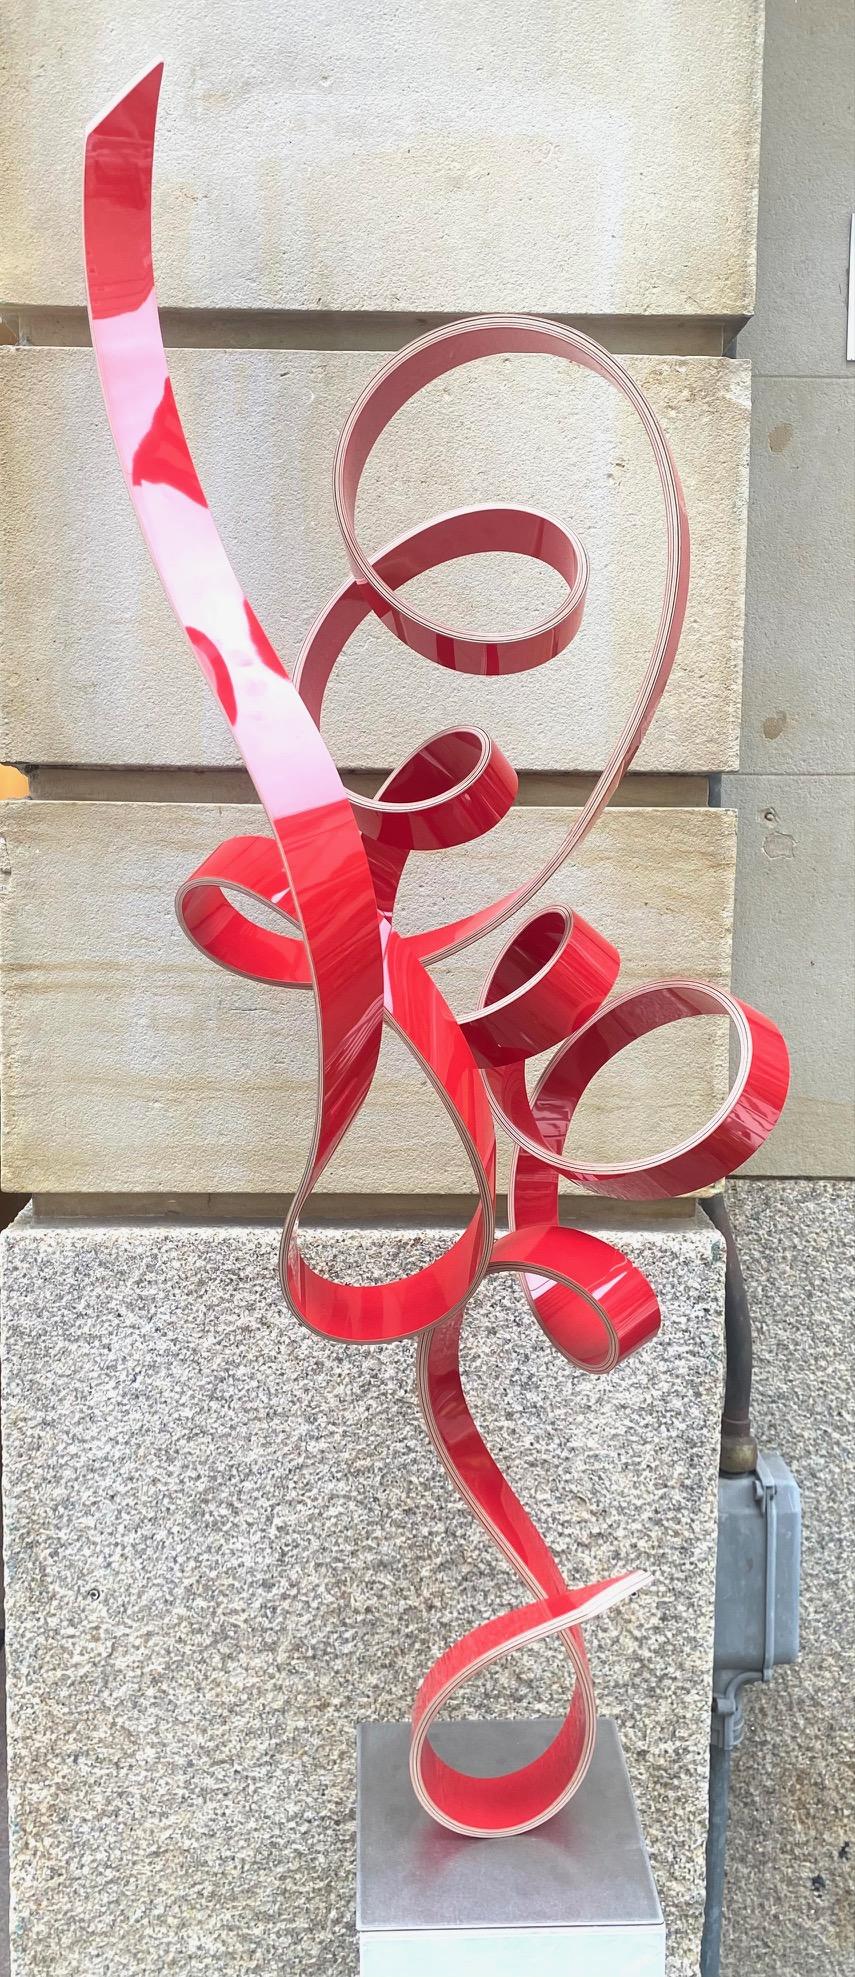 MTX -curvilinear minimalist maplewood sculpture defying gravity by Jacinto Moros 1